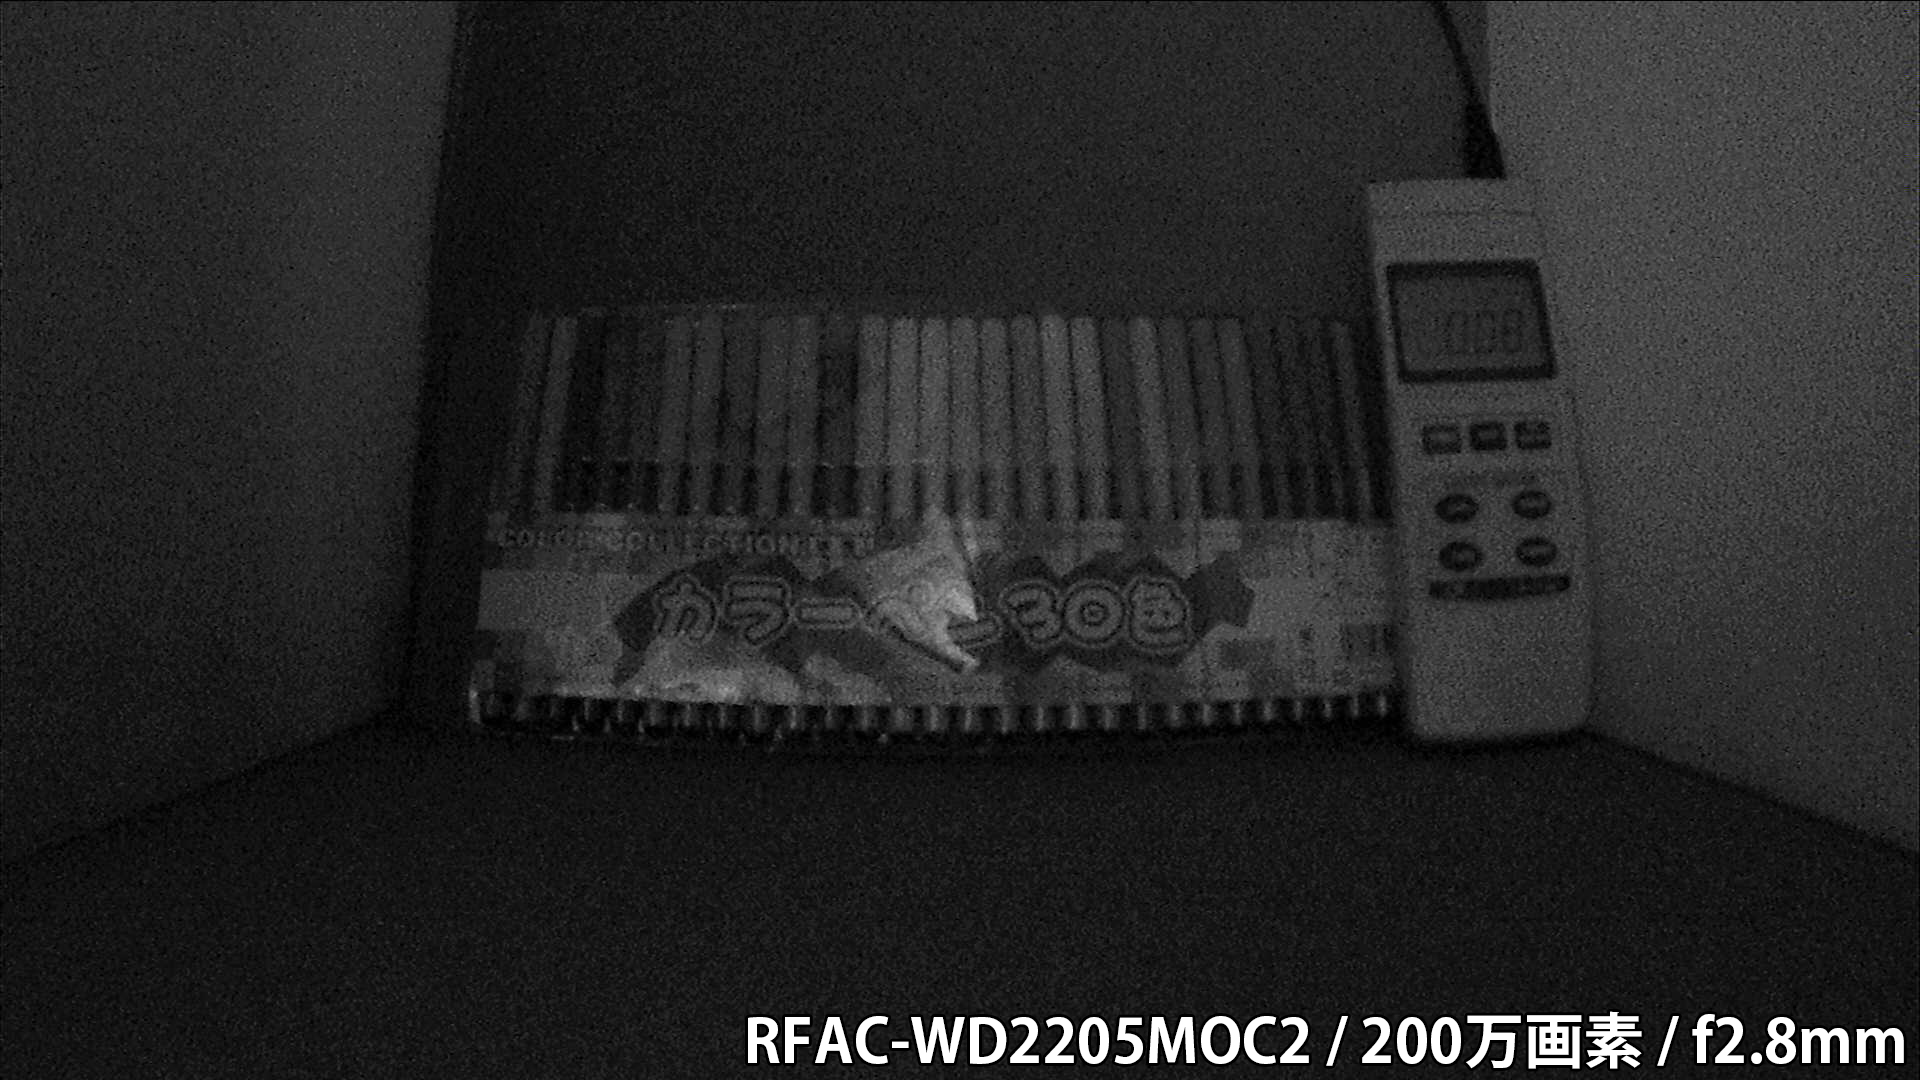 RFAC-WD2205MOC2 カメラから約40cm離れた被写体を暗視撮影